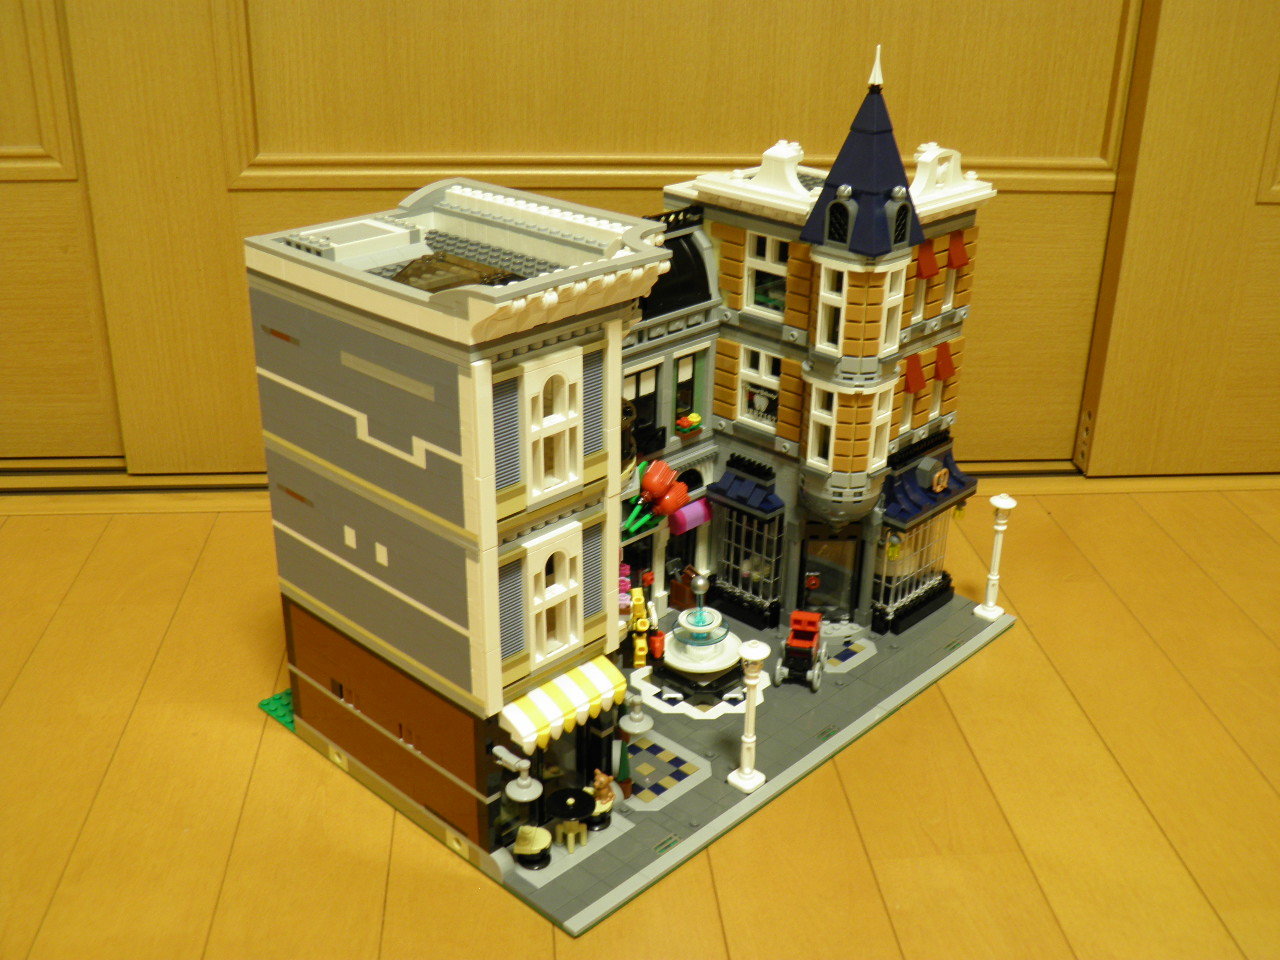 LEGOレビュー ＃10255 にぎやかな街角（Assembly Square） | MITAKENの部屋